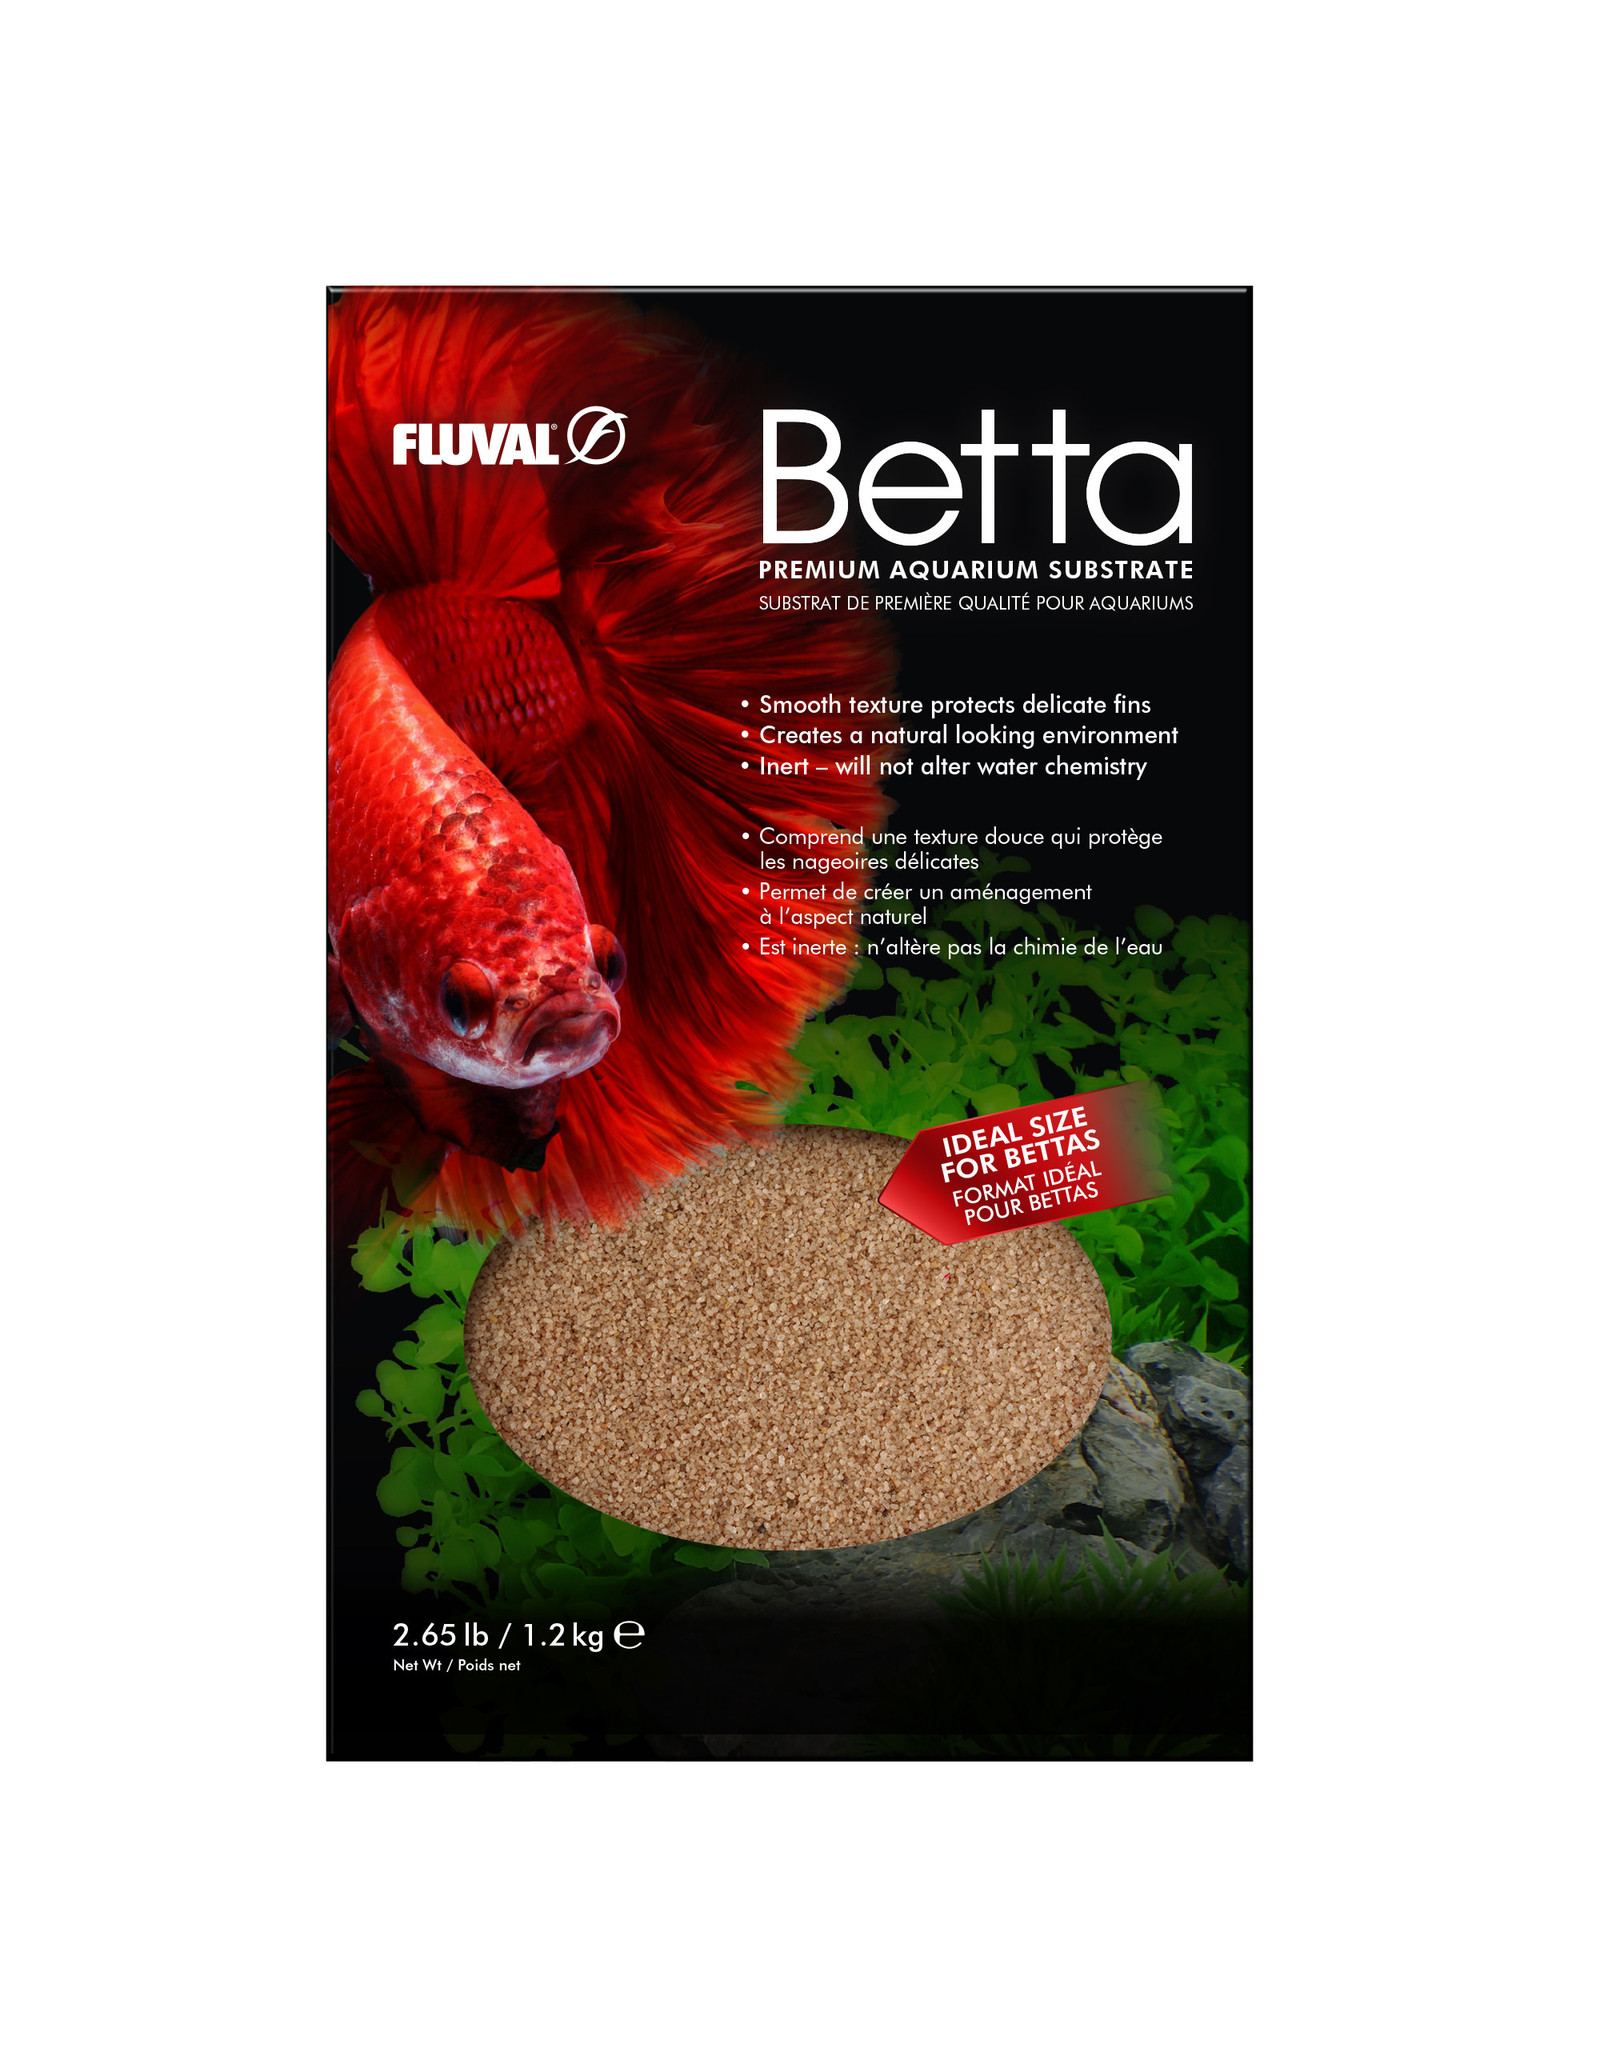 Fluval Fluval Betta Aquarium Substrate Kaffee 2.65lb (1.2kg)